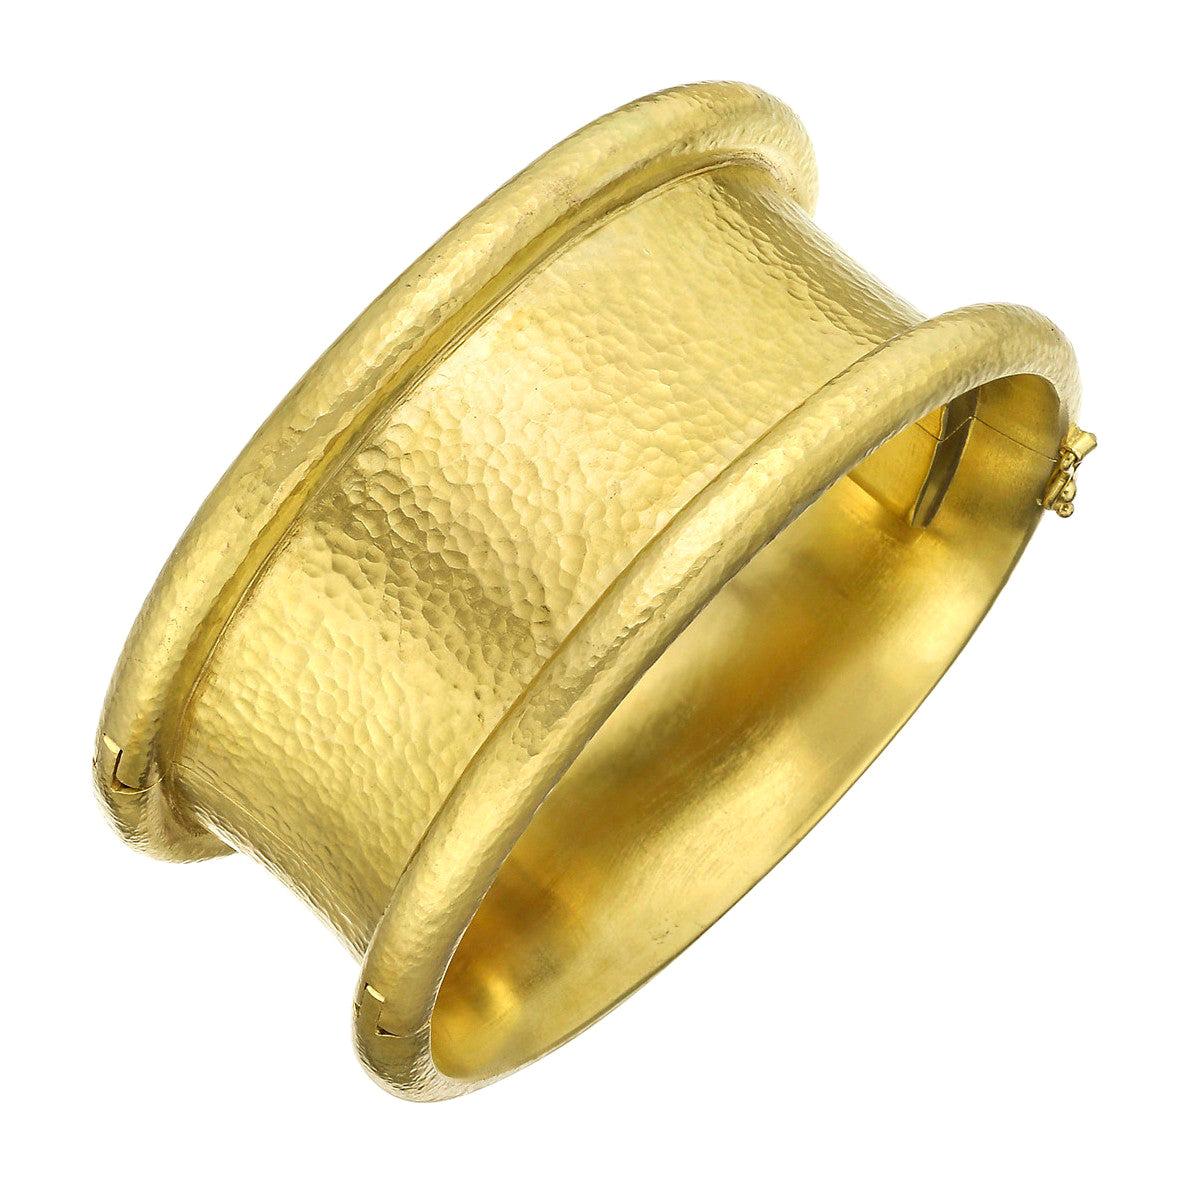 Elizabeth Locke 19 Karat Yellow Gold "Amulet" Cuff Bracelet